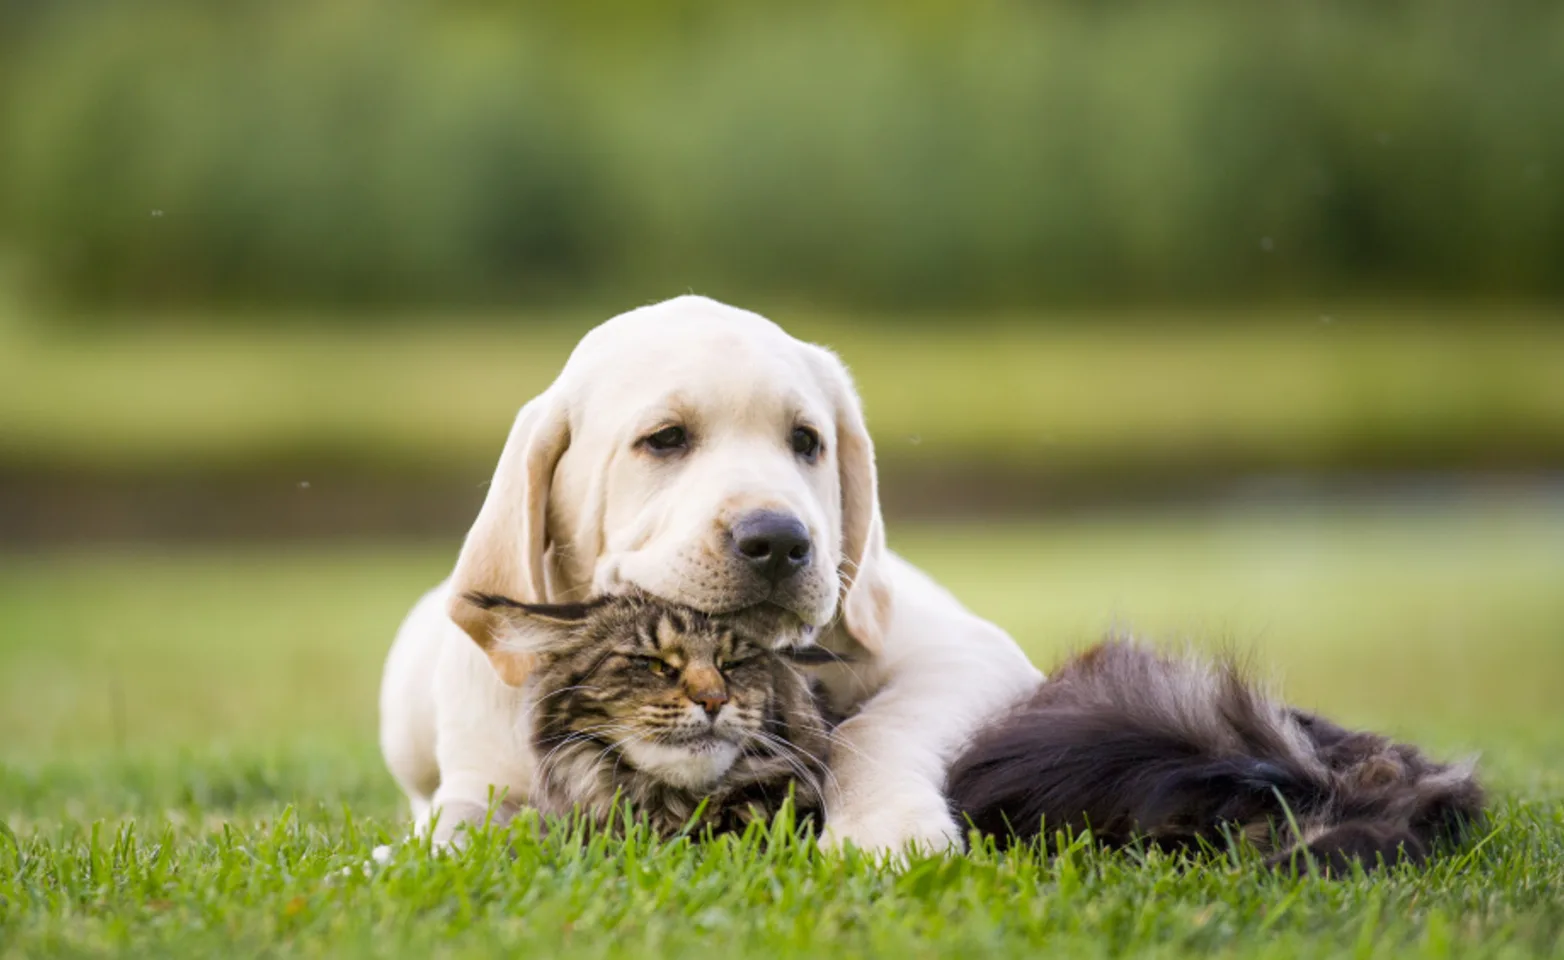 Labrador retriever puppy and cat cuddling on grass lawn